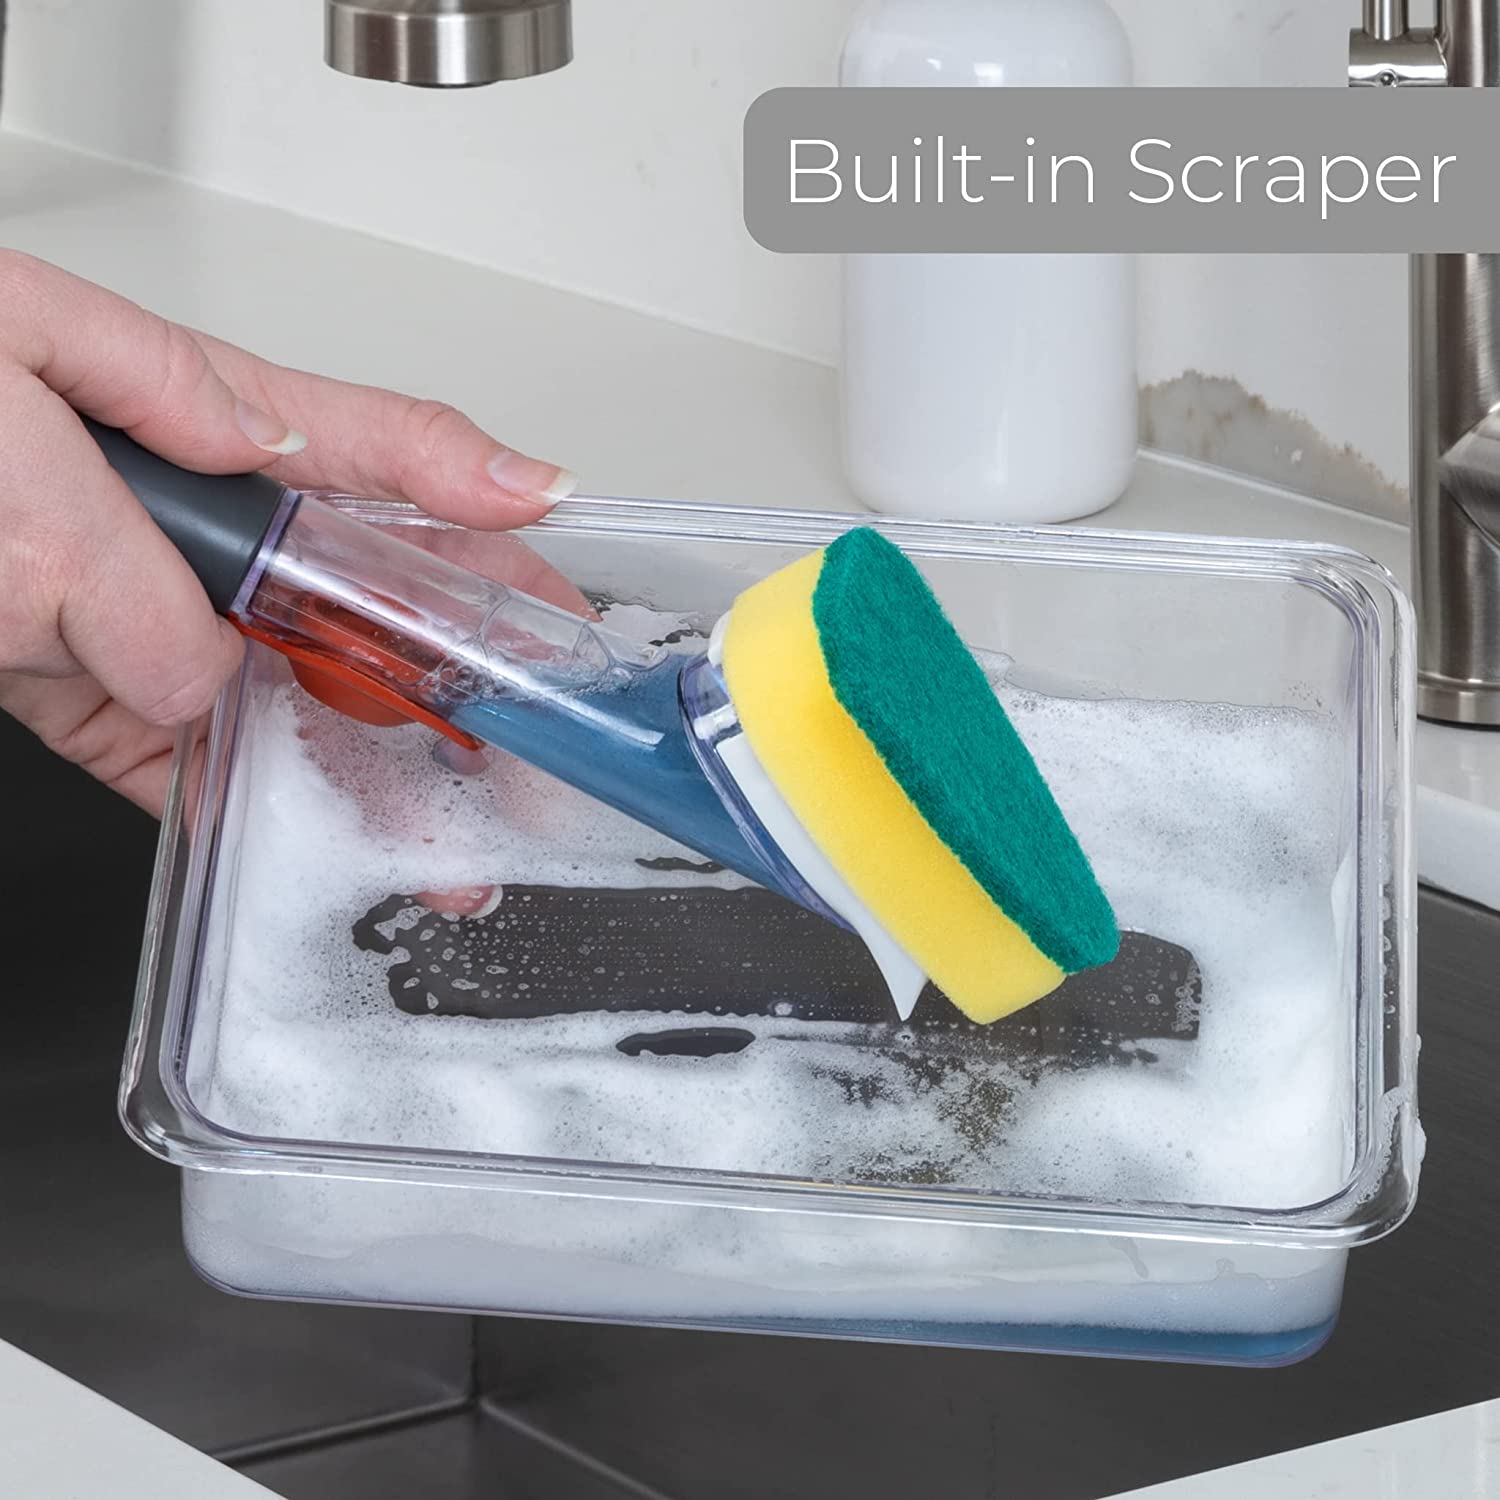 Kitchen soap dispenser palm brush │ Dish sponge with soap dispenser